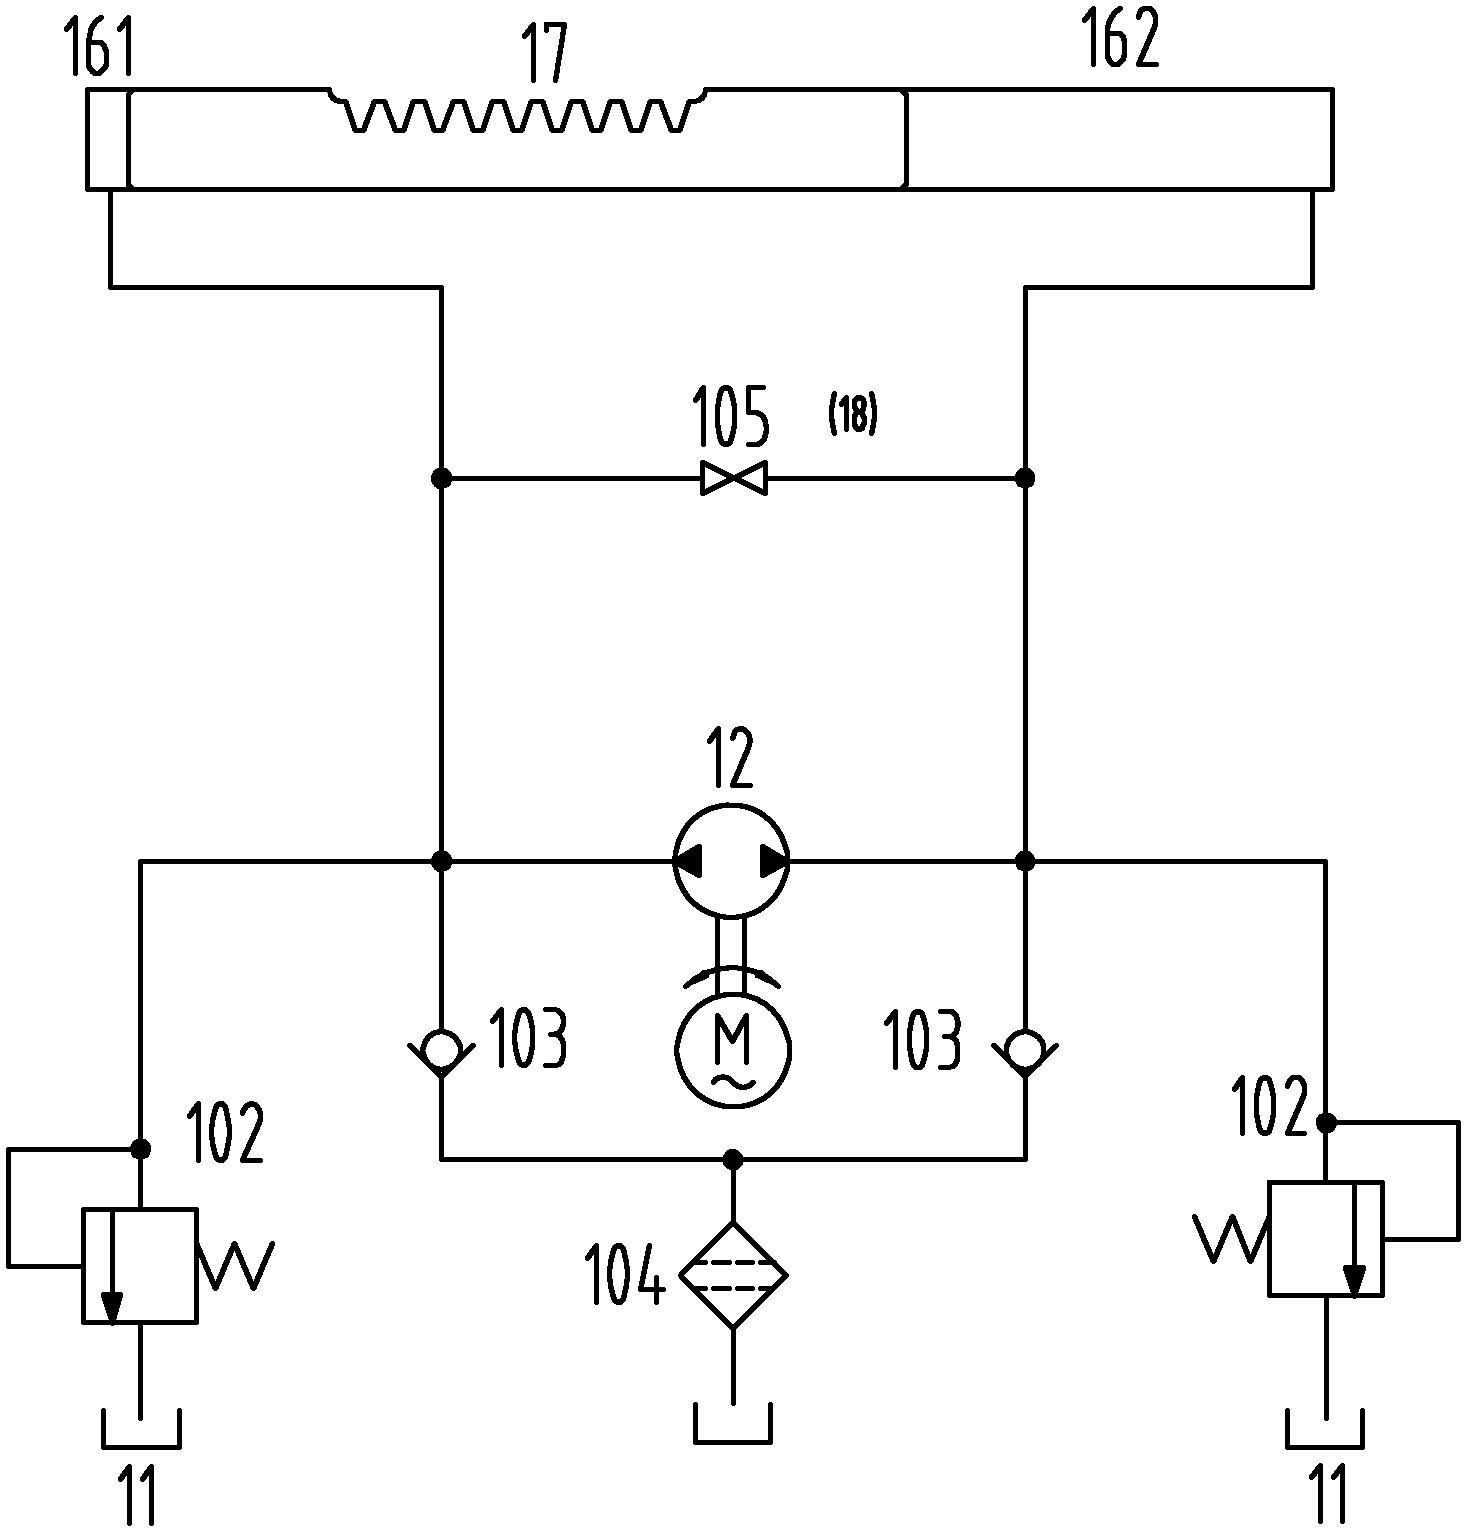 Hydraulic assembly of electro-hydraulic switch machine